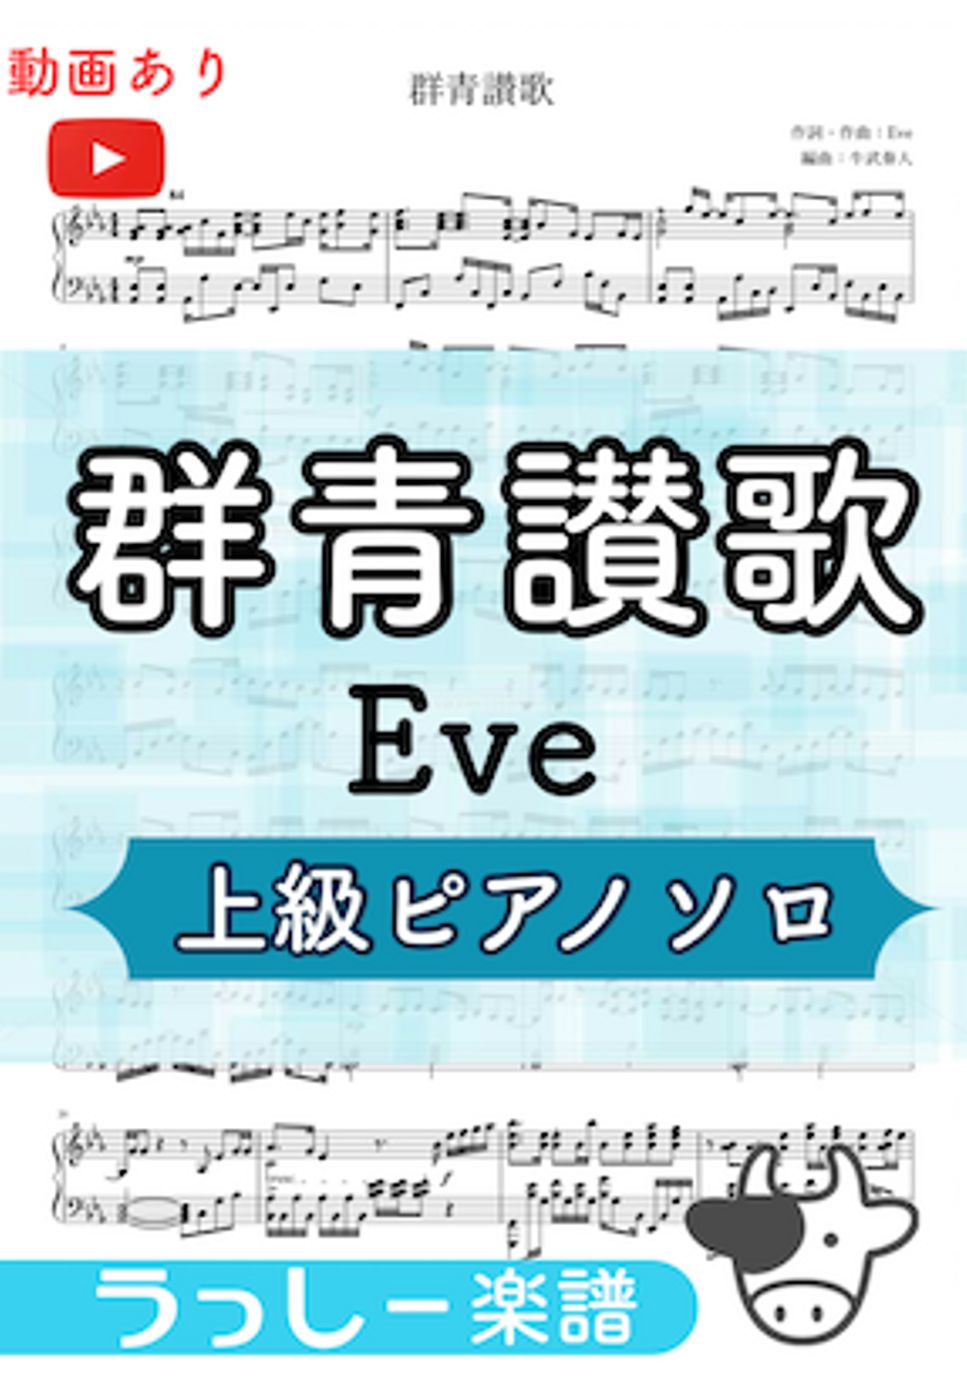 Eve - 群青讃歌 (上級ピアノソロ) by 牛武奏人